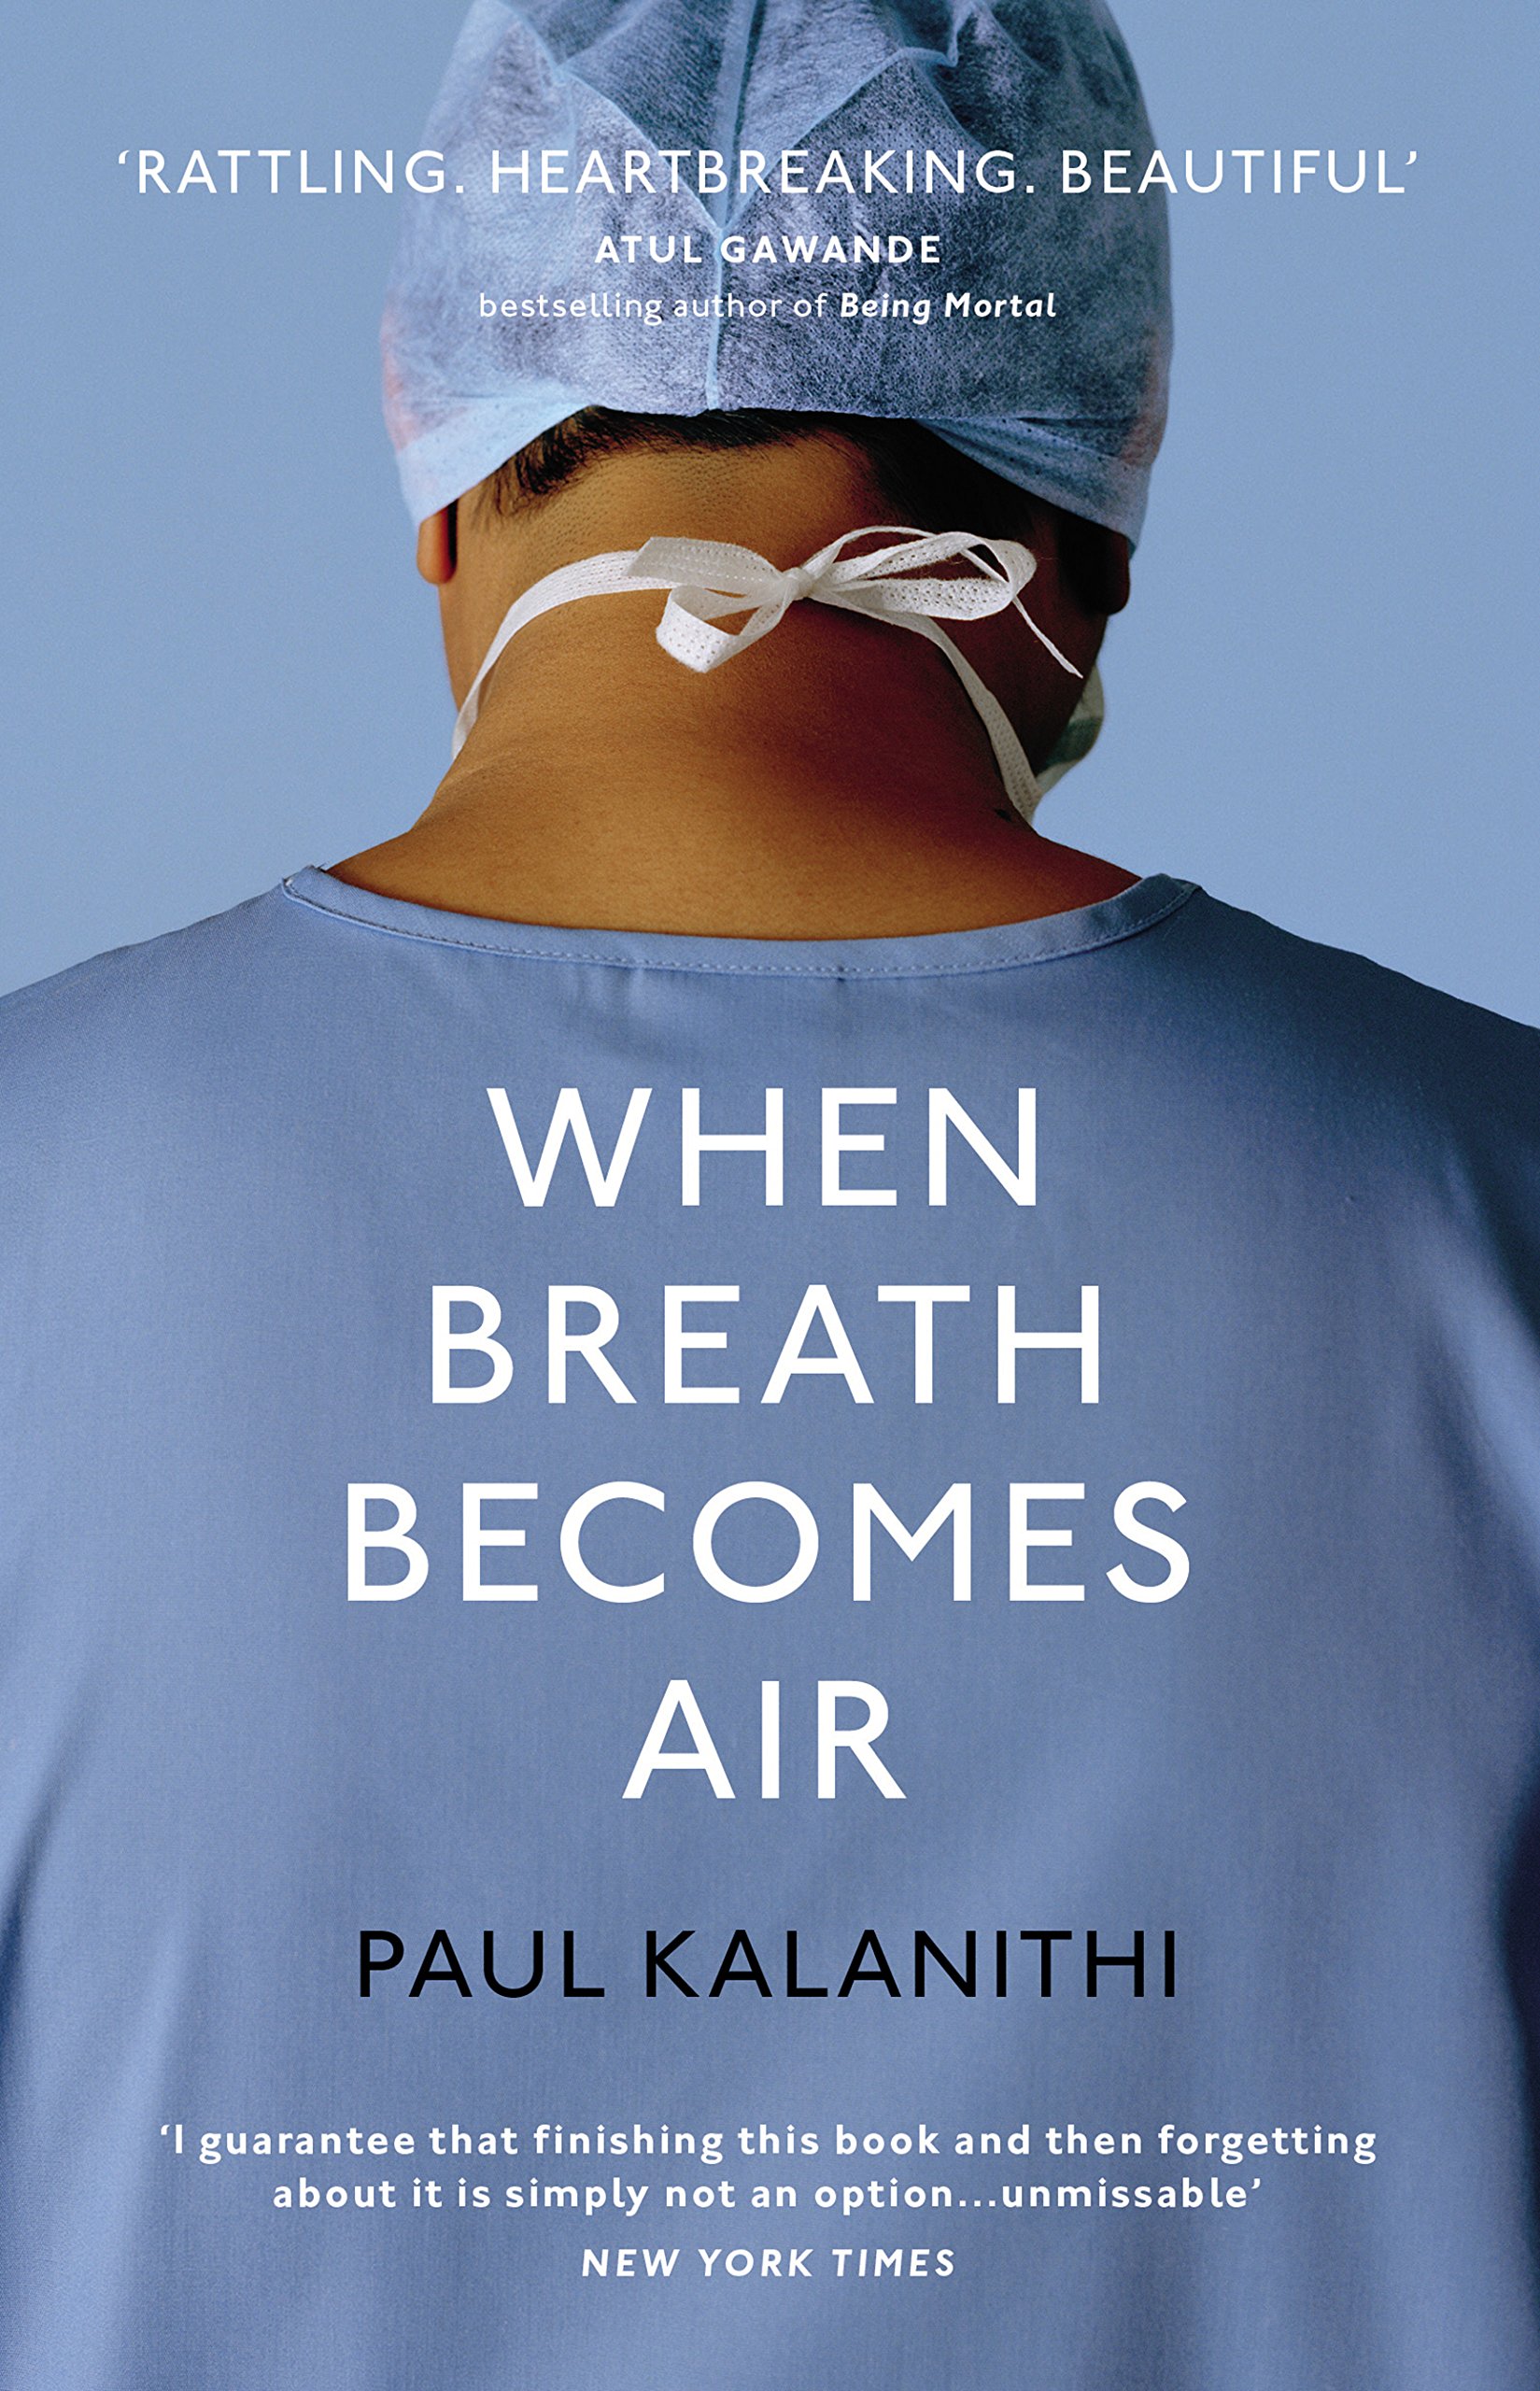 When Breath Becomes Air: Amazon.co.uk: Paul Kalanithi: Books